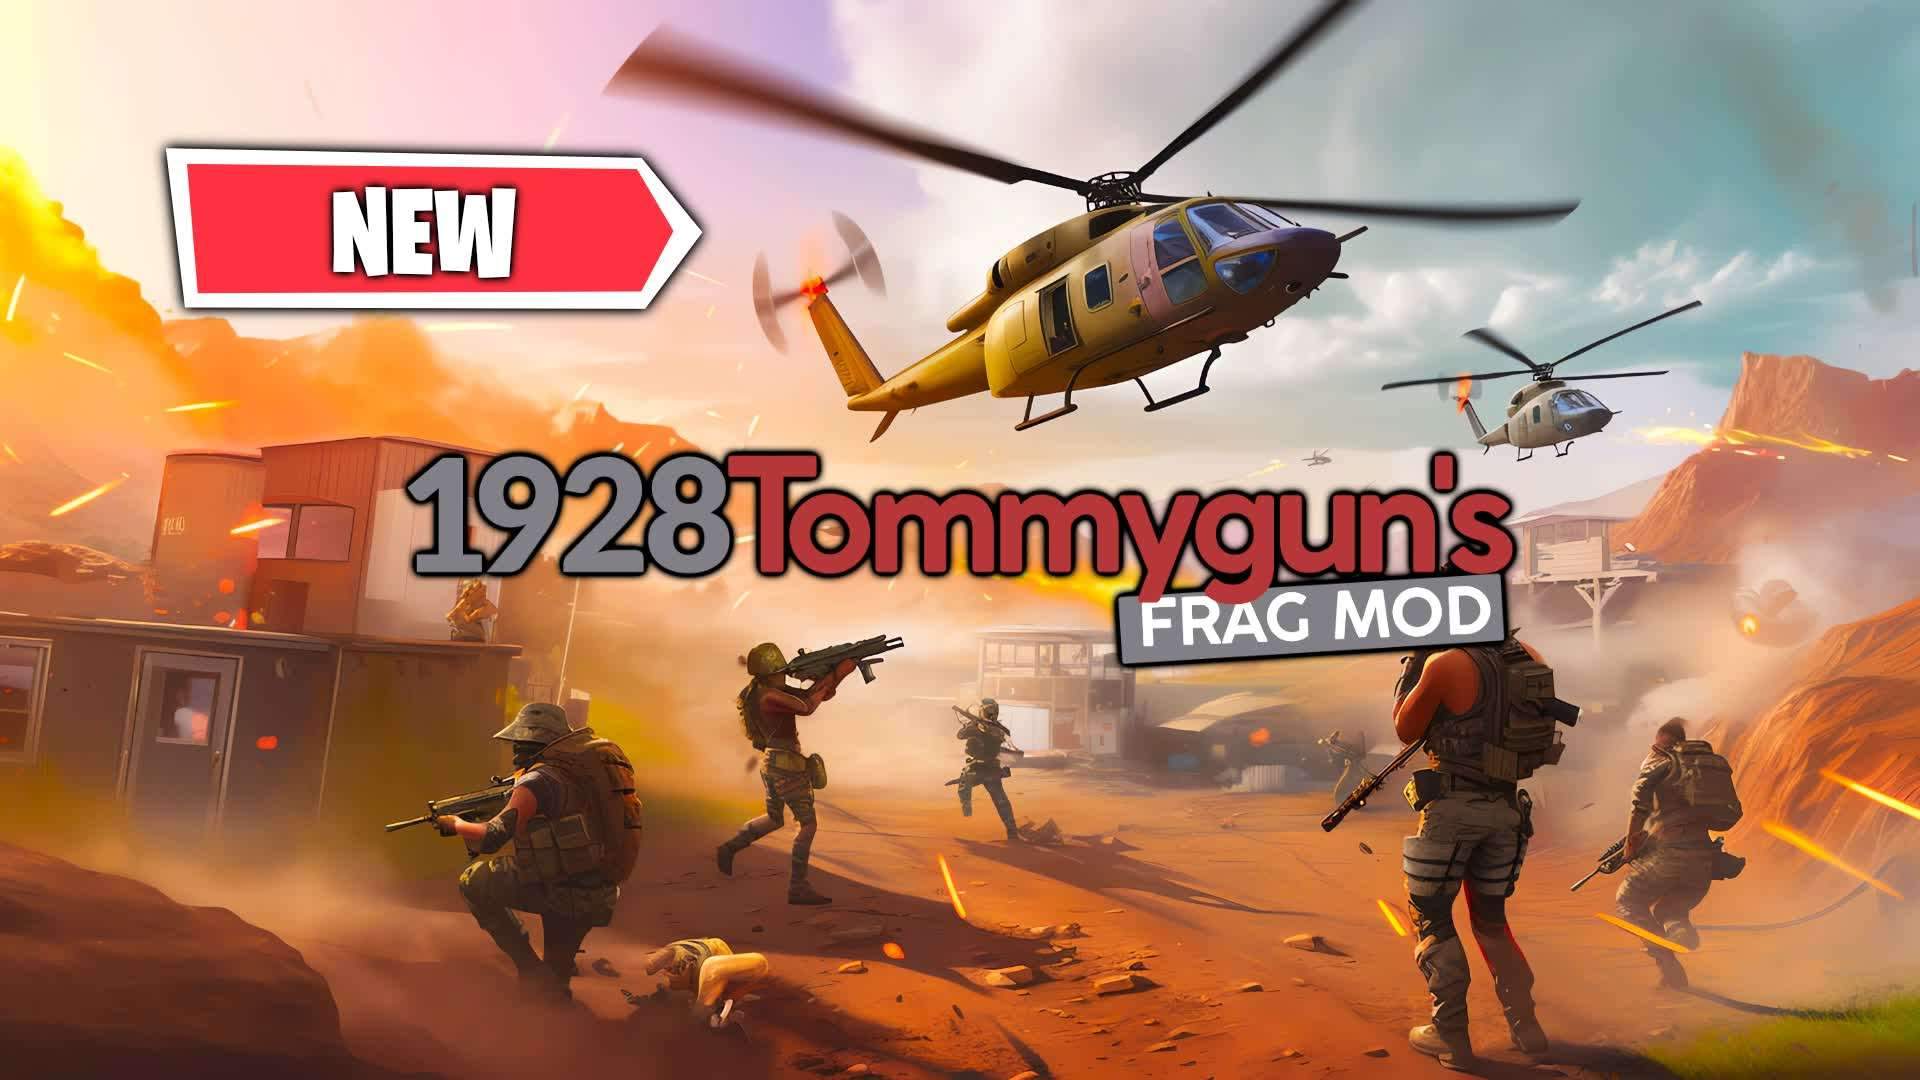 TommygunsFragMod